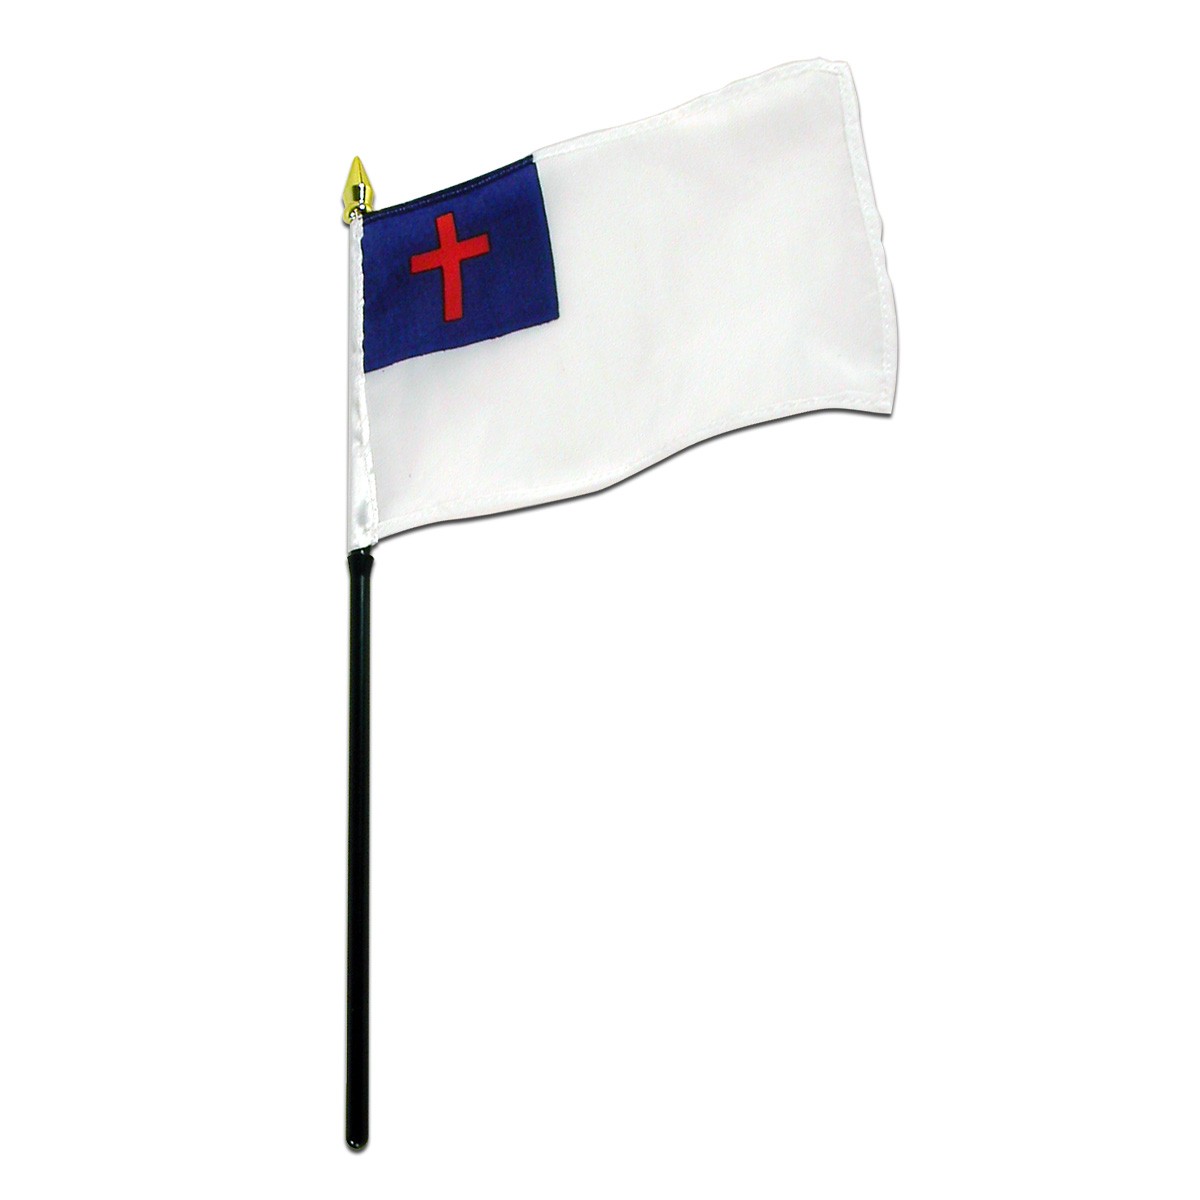 Christian Flags - U.S. Flag Store